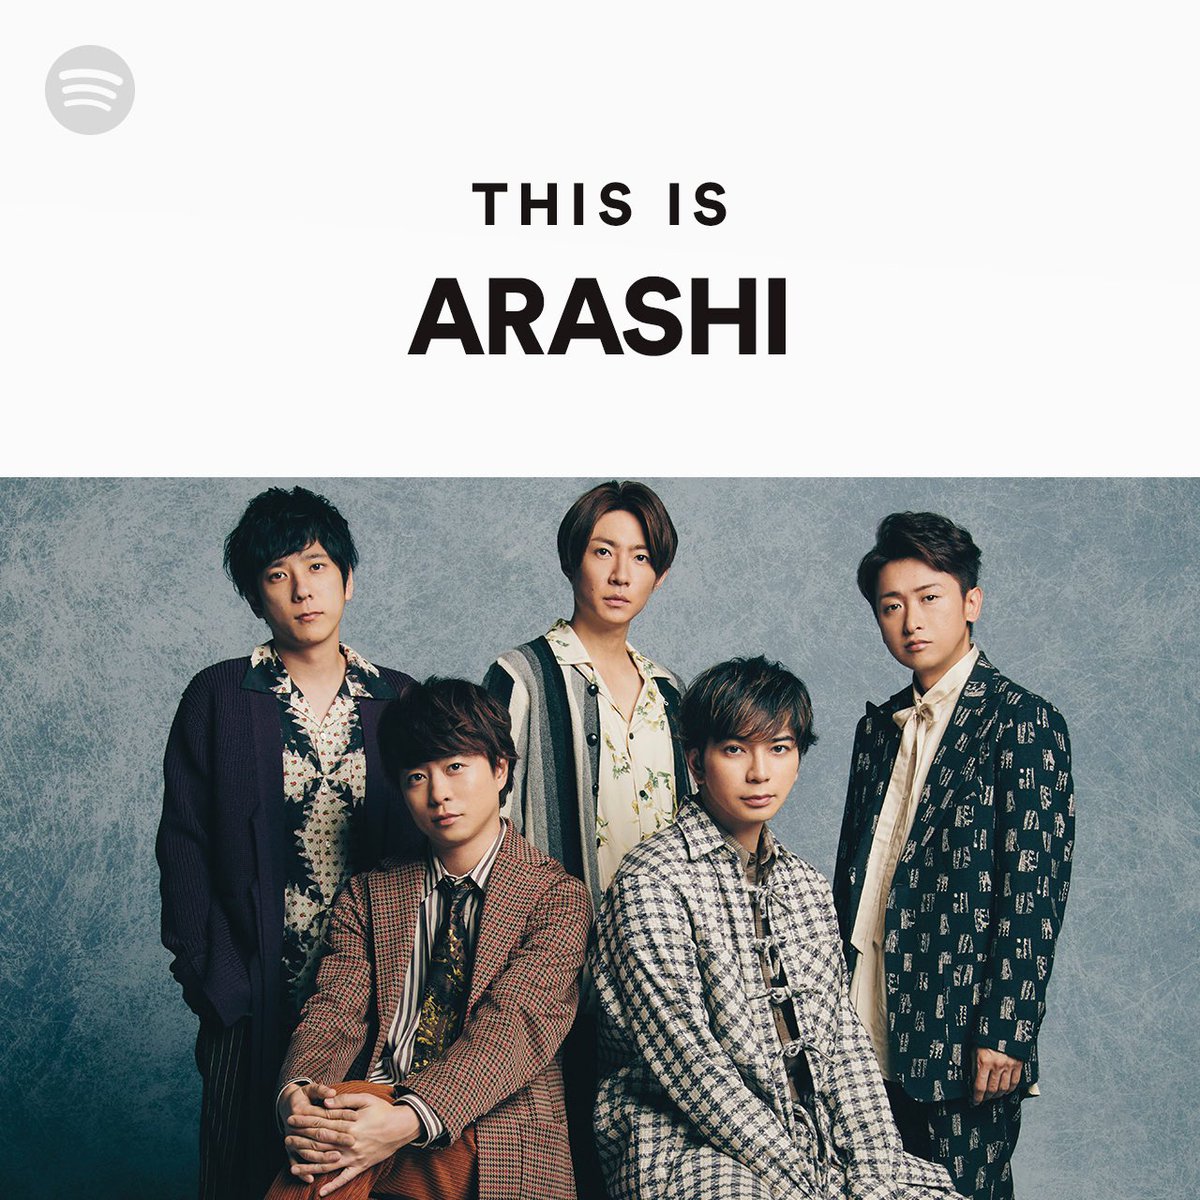 Spotify Japan No Twitter Mステ 140回目の出演 嵐 Arashi5official が披露した Whenever You Call 迷宮ラブソング Bittersweet ほか 嵐の楽曲を This Is Arashi で堪能しよう T Co Szpjuwwh1f Arashionspotify Thisis嵐 Arashi